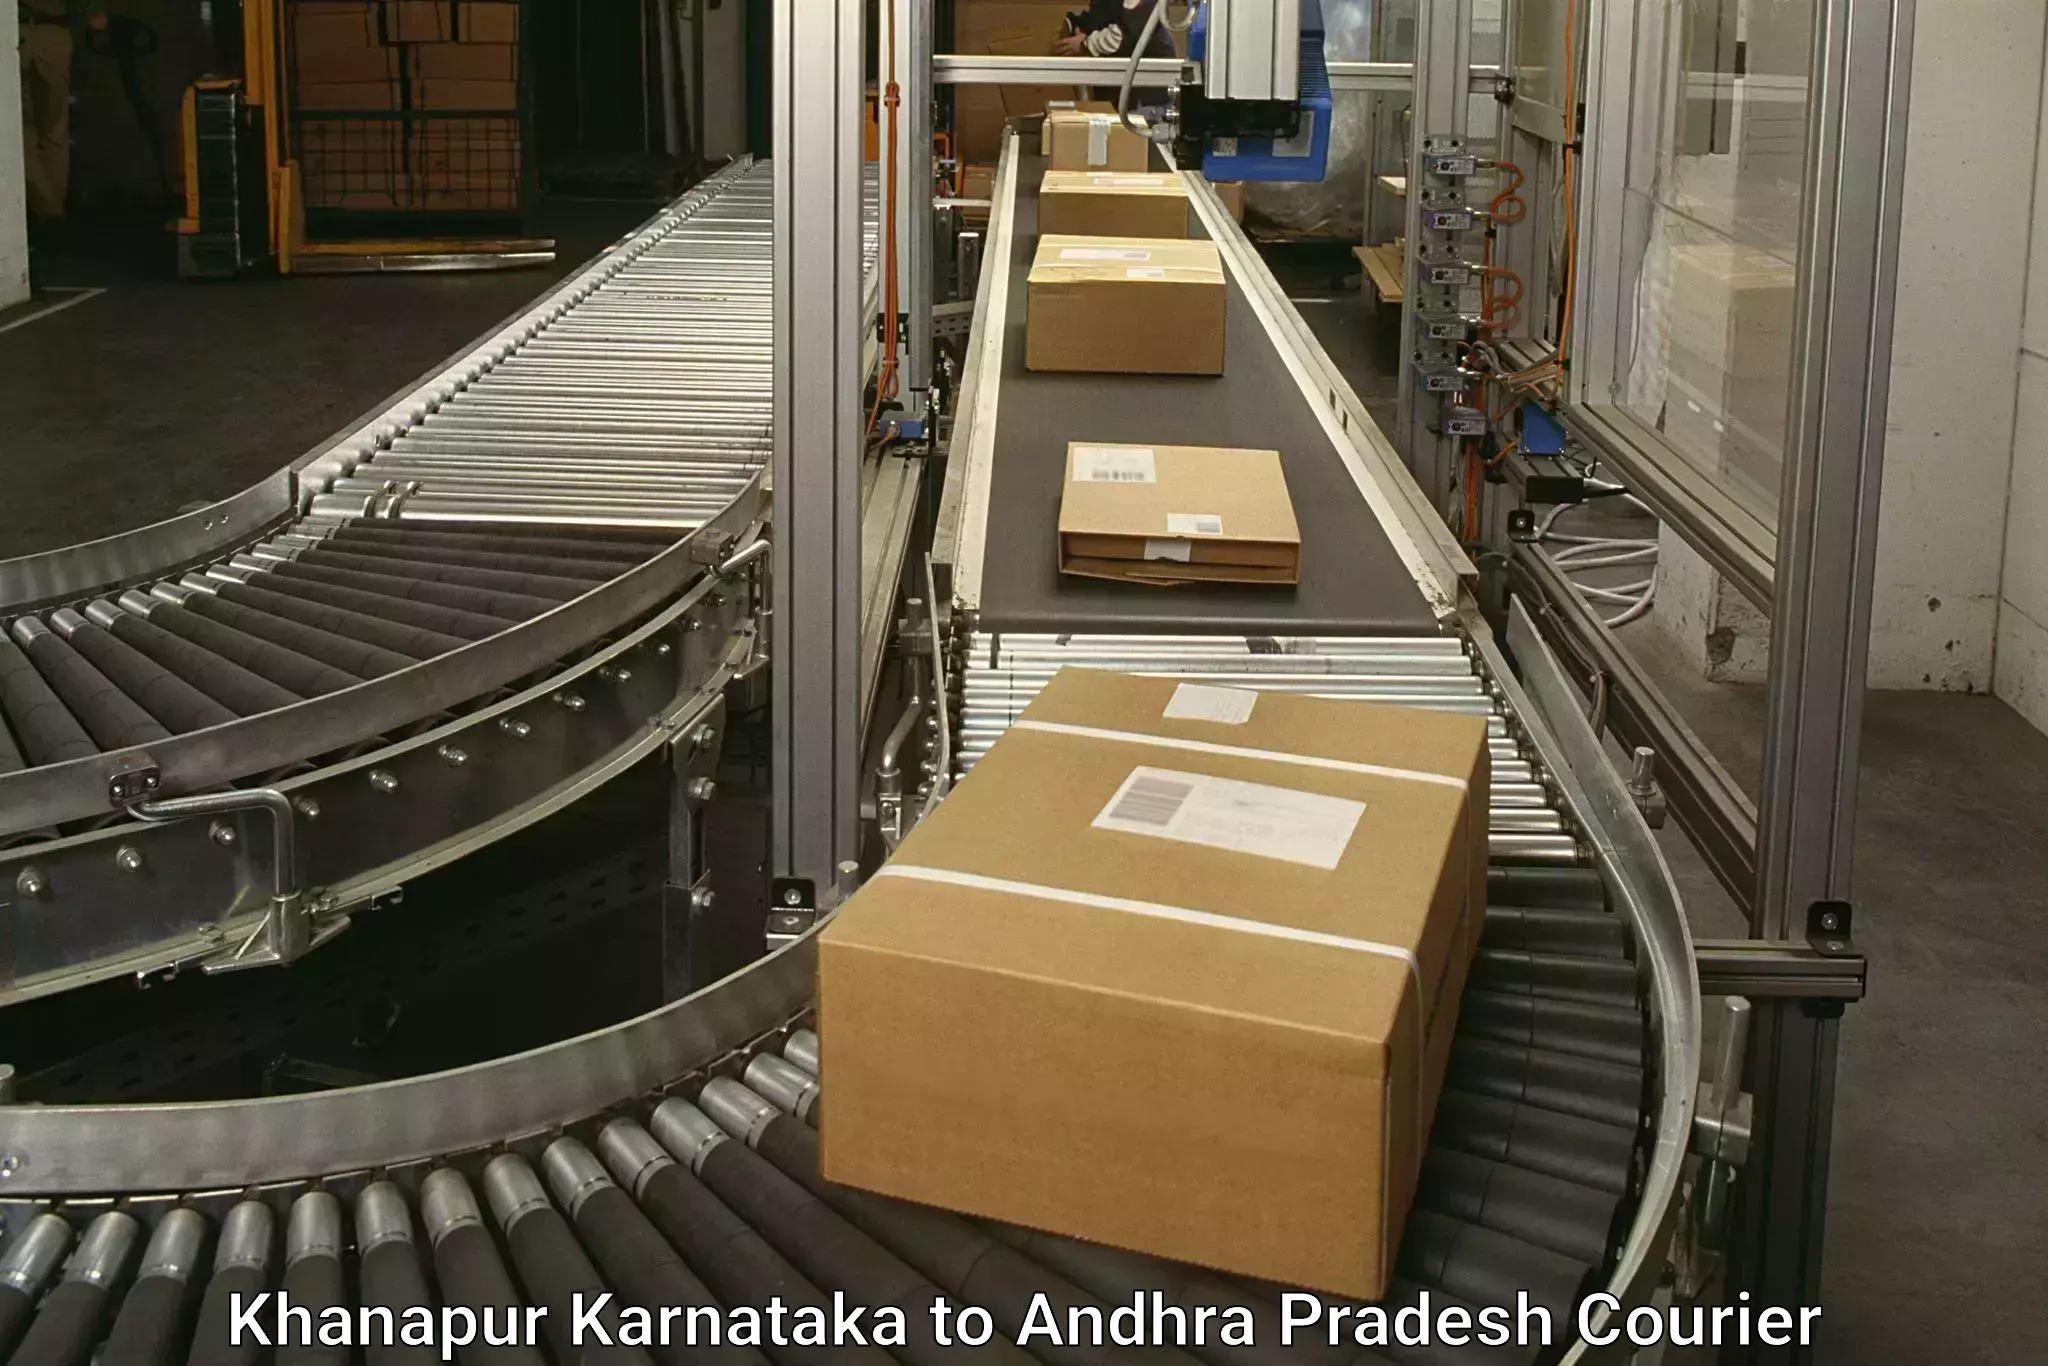 Large package courier Khanapur Karnataka to Andhra Pradesh